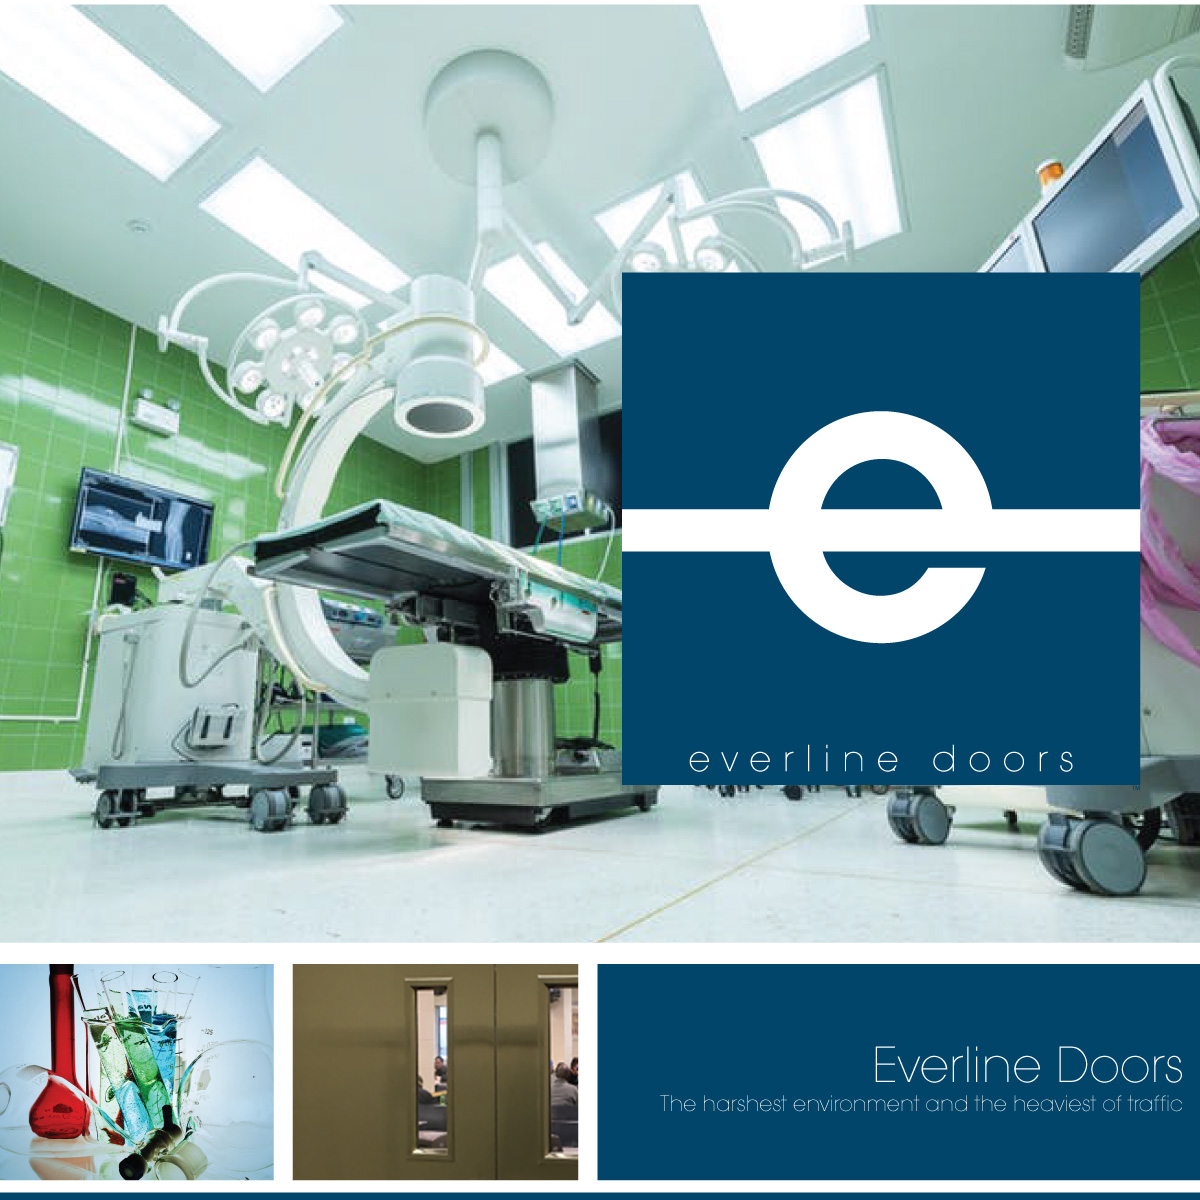 everline doors product layout design